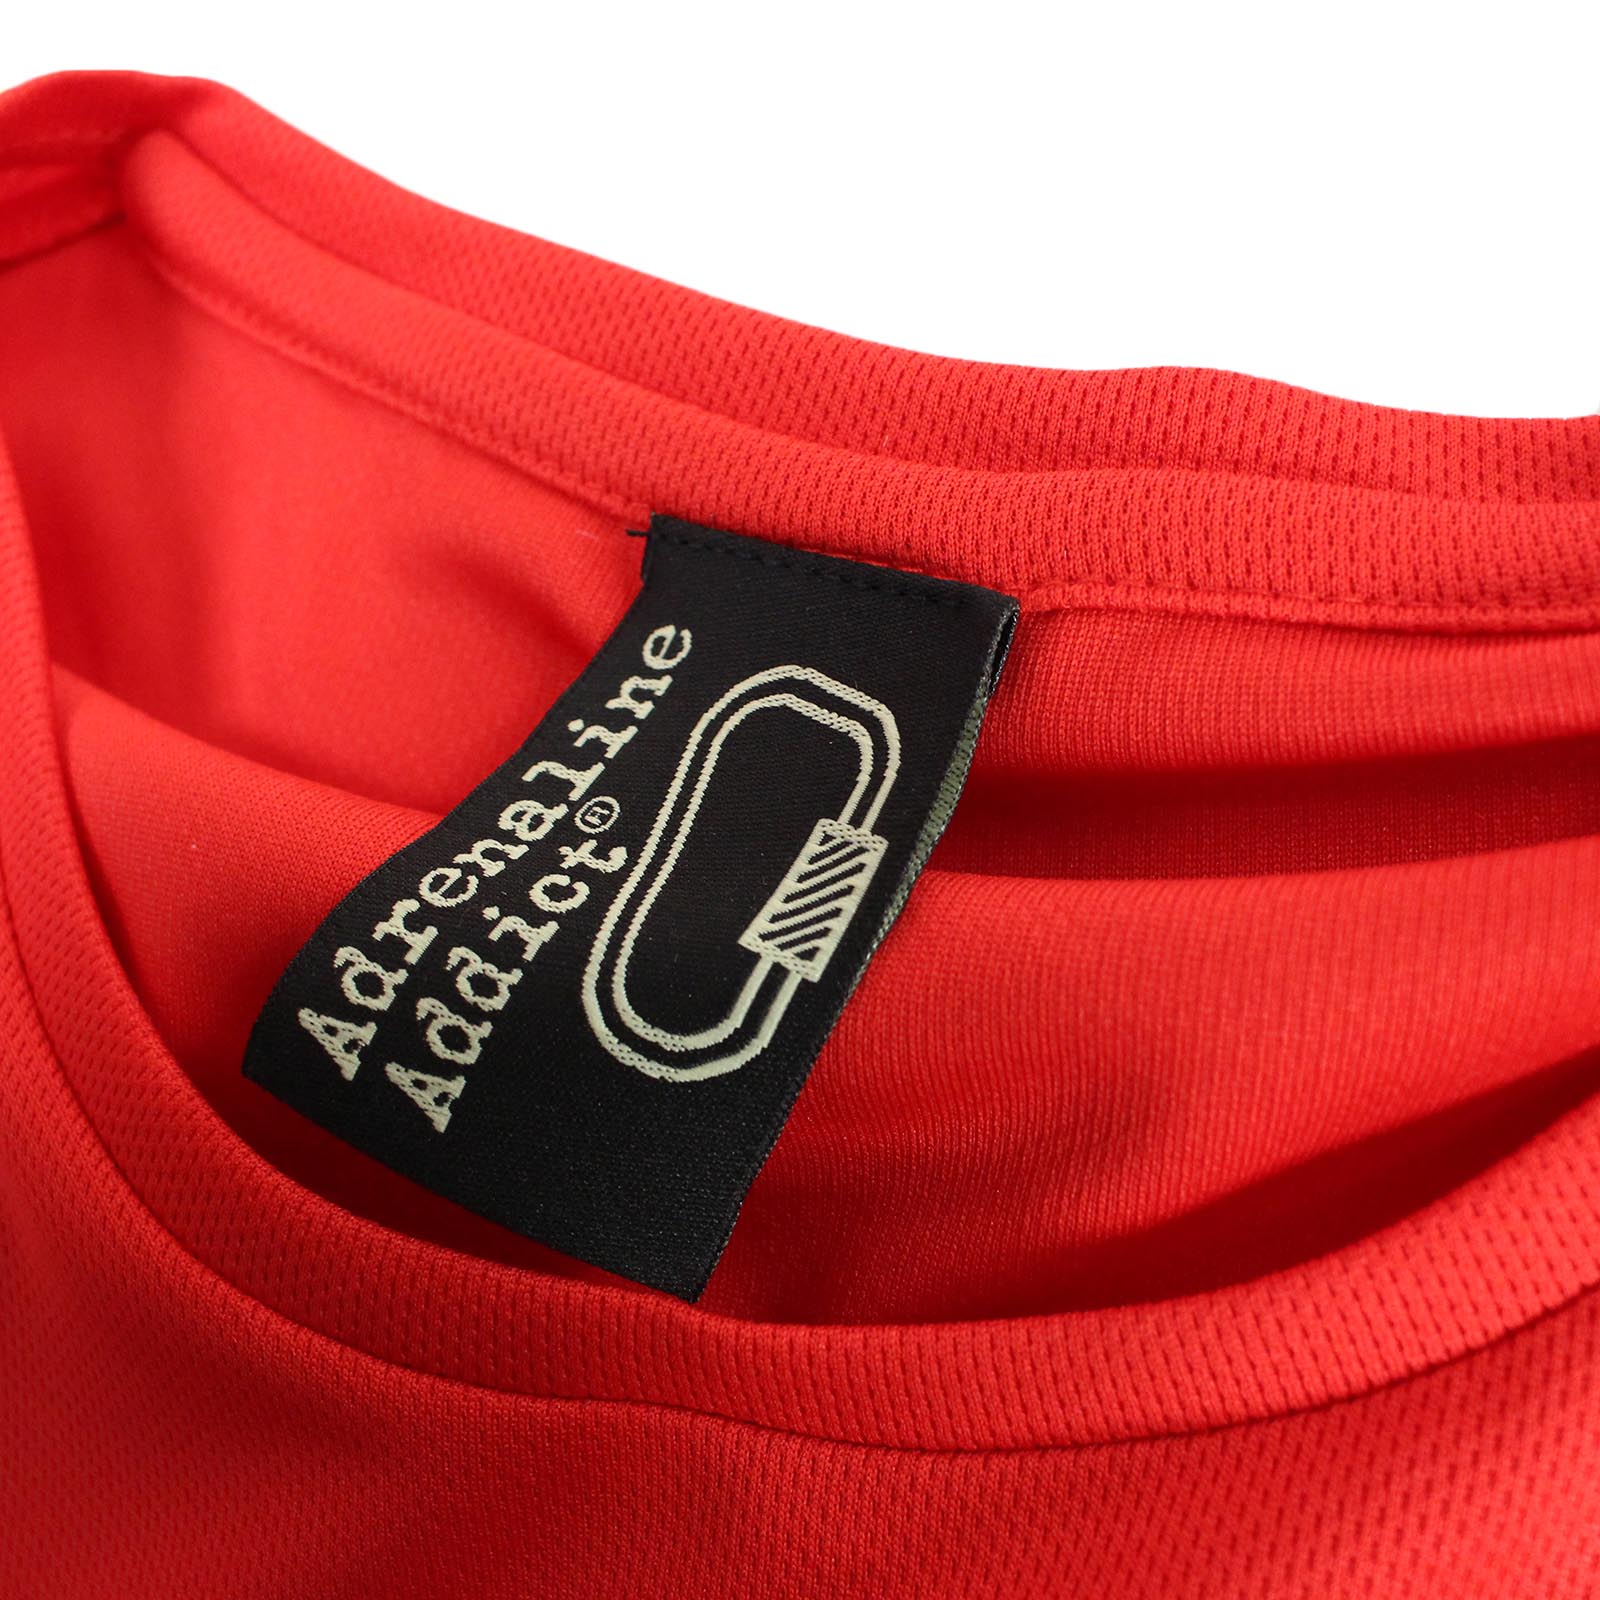 Adrenaline Addict-desafiar la gravedad-Dry Fit Transpirable Deportes Cuello Redondo Camiseta